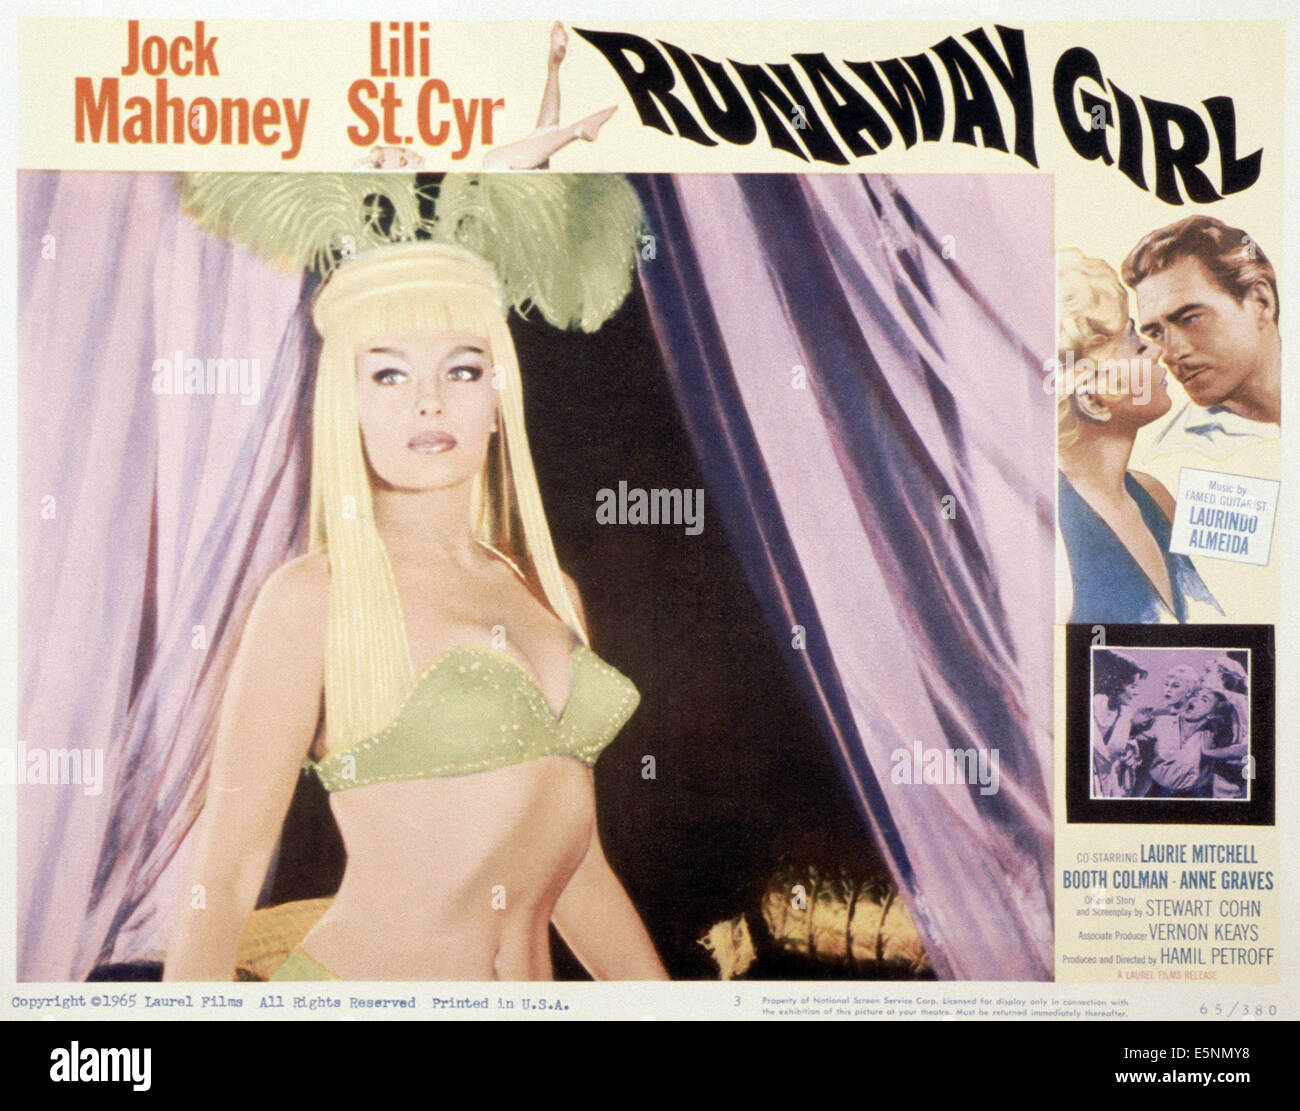 RUNAWAY GIRL, US lobbycard, Lili St. Cyr (center), 1965 Stock Photo